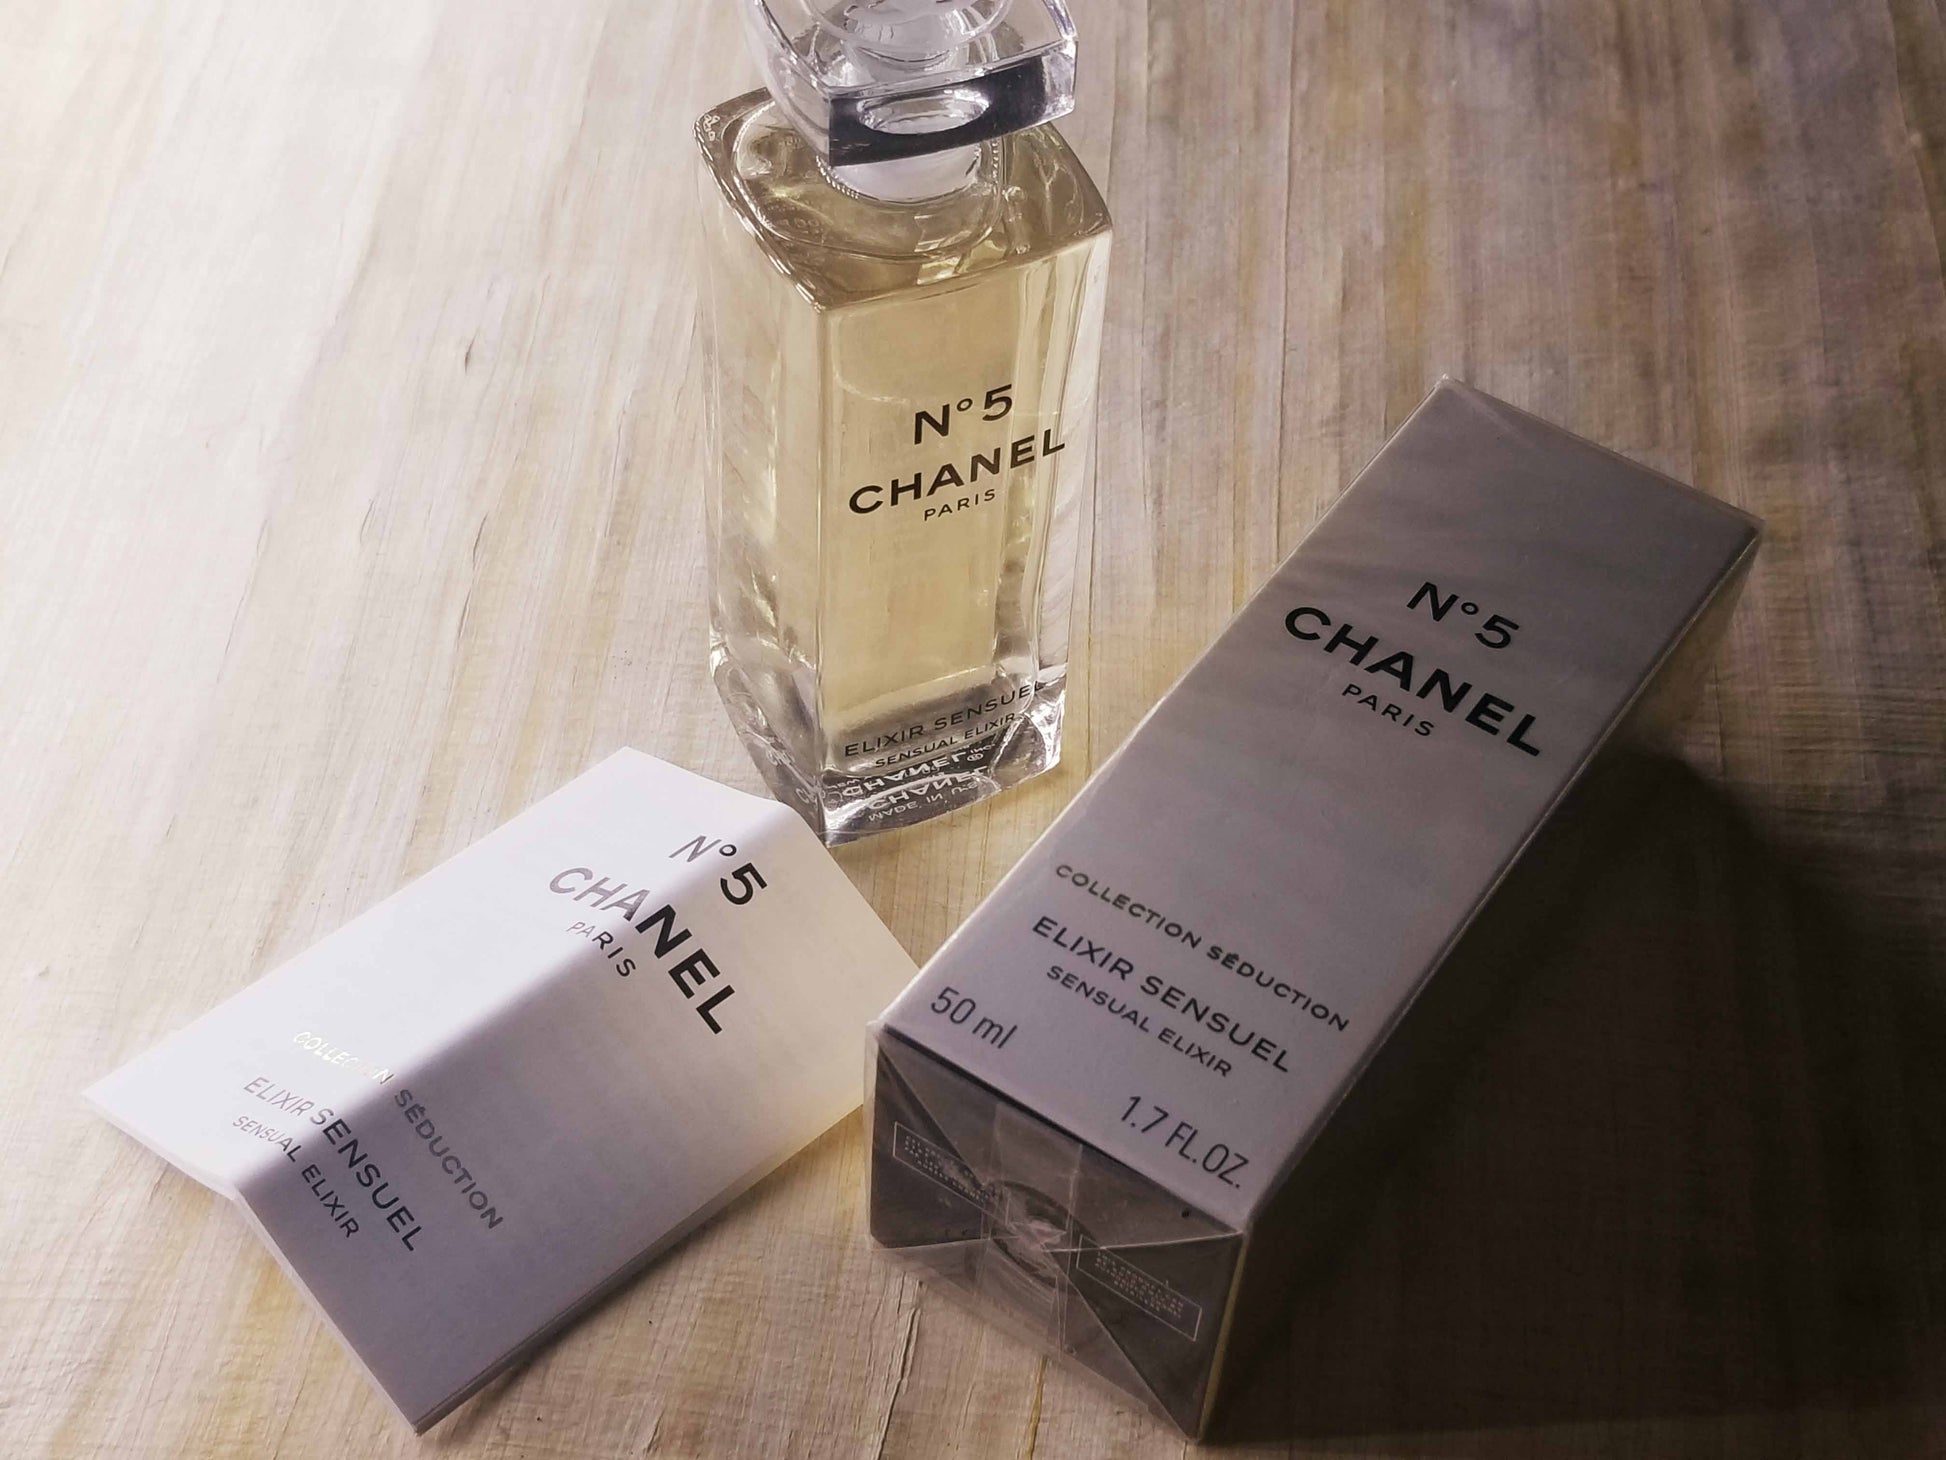 Chanel 5 Elixir sensuelle, Zagreb 